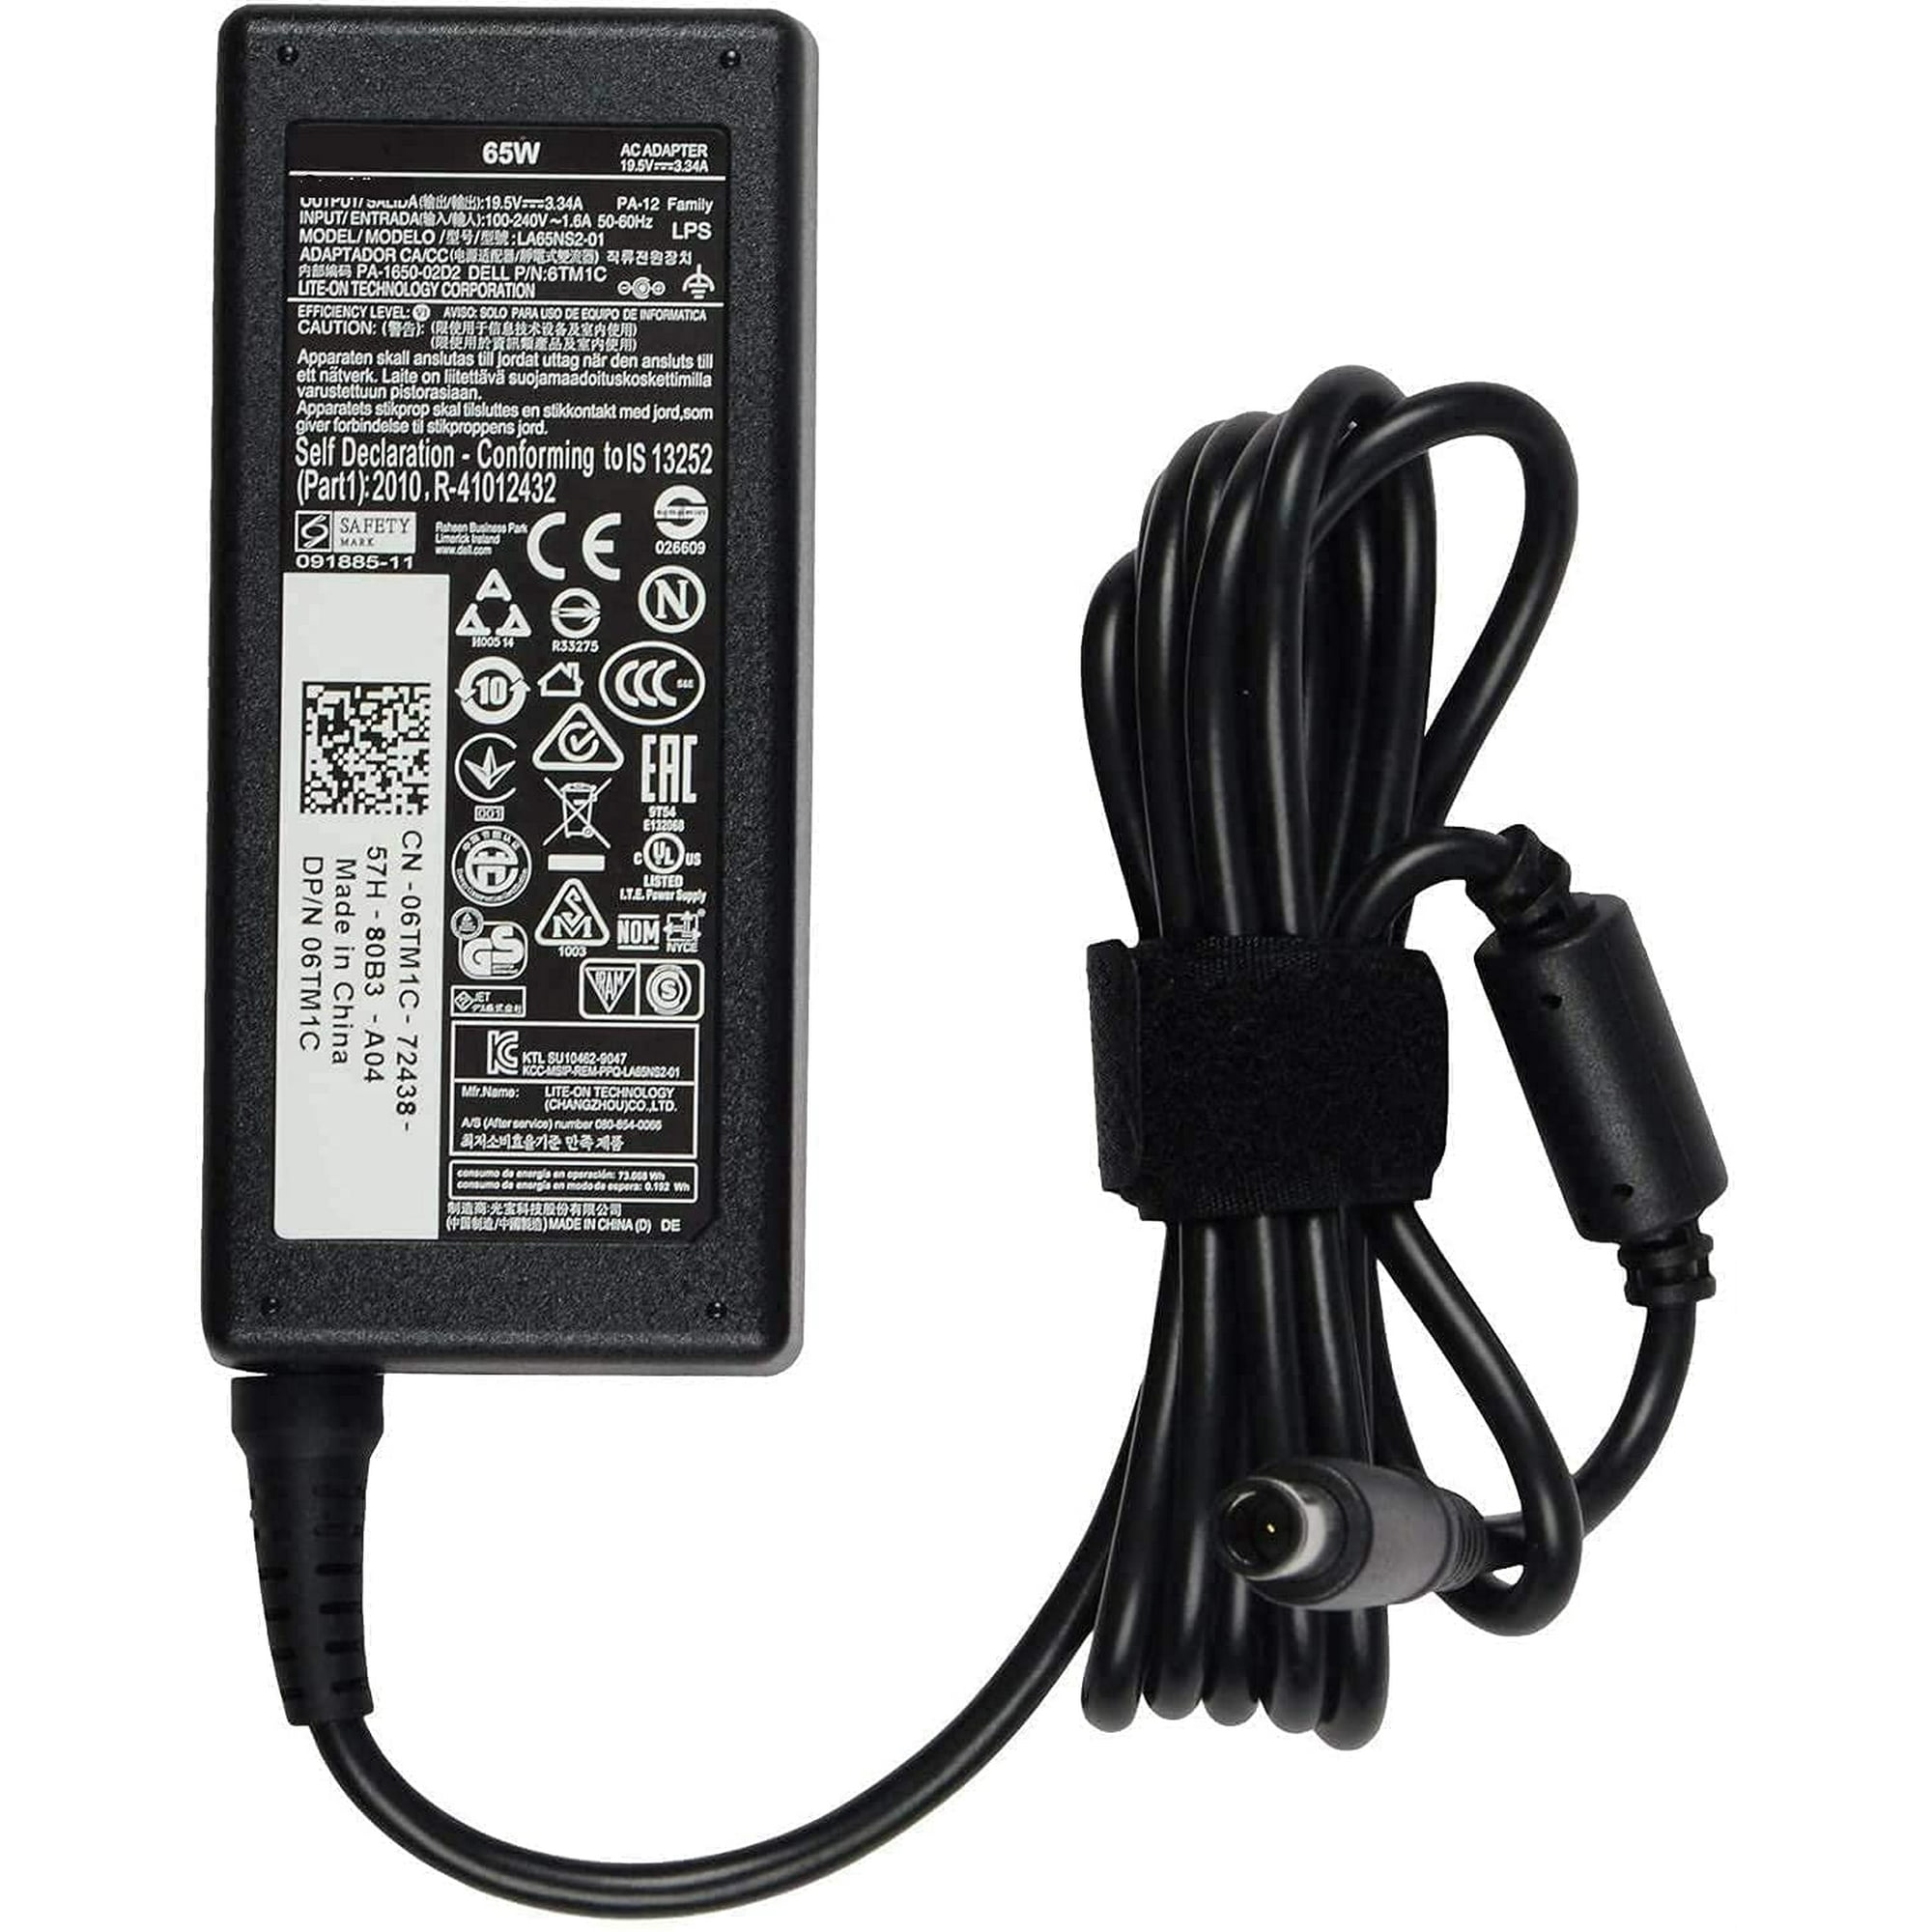   65W AC Charger Fit for Dell Latitude 7480 7490 5490 7280 7390  E5430 E6230 E6330 6430U; 15 3521 3531 15R 5520 7520 N5010 Laptop Power  Adapter Supply Cord. Plug Size:  | Walmart Canada